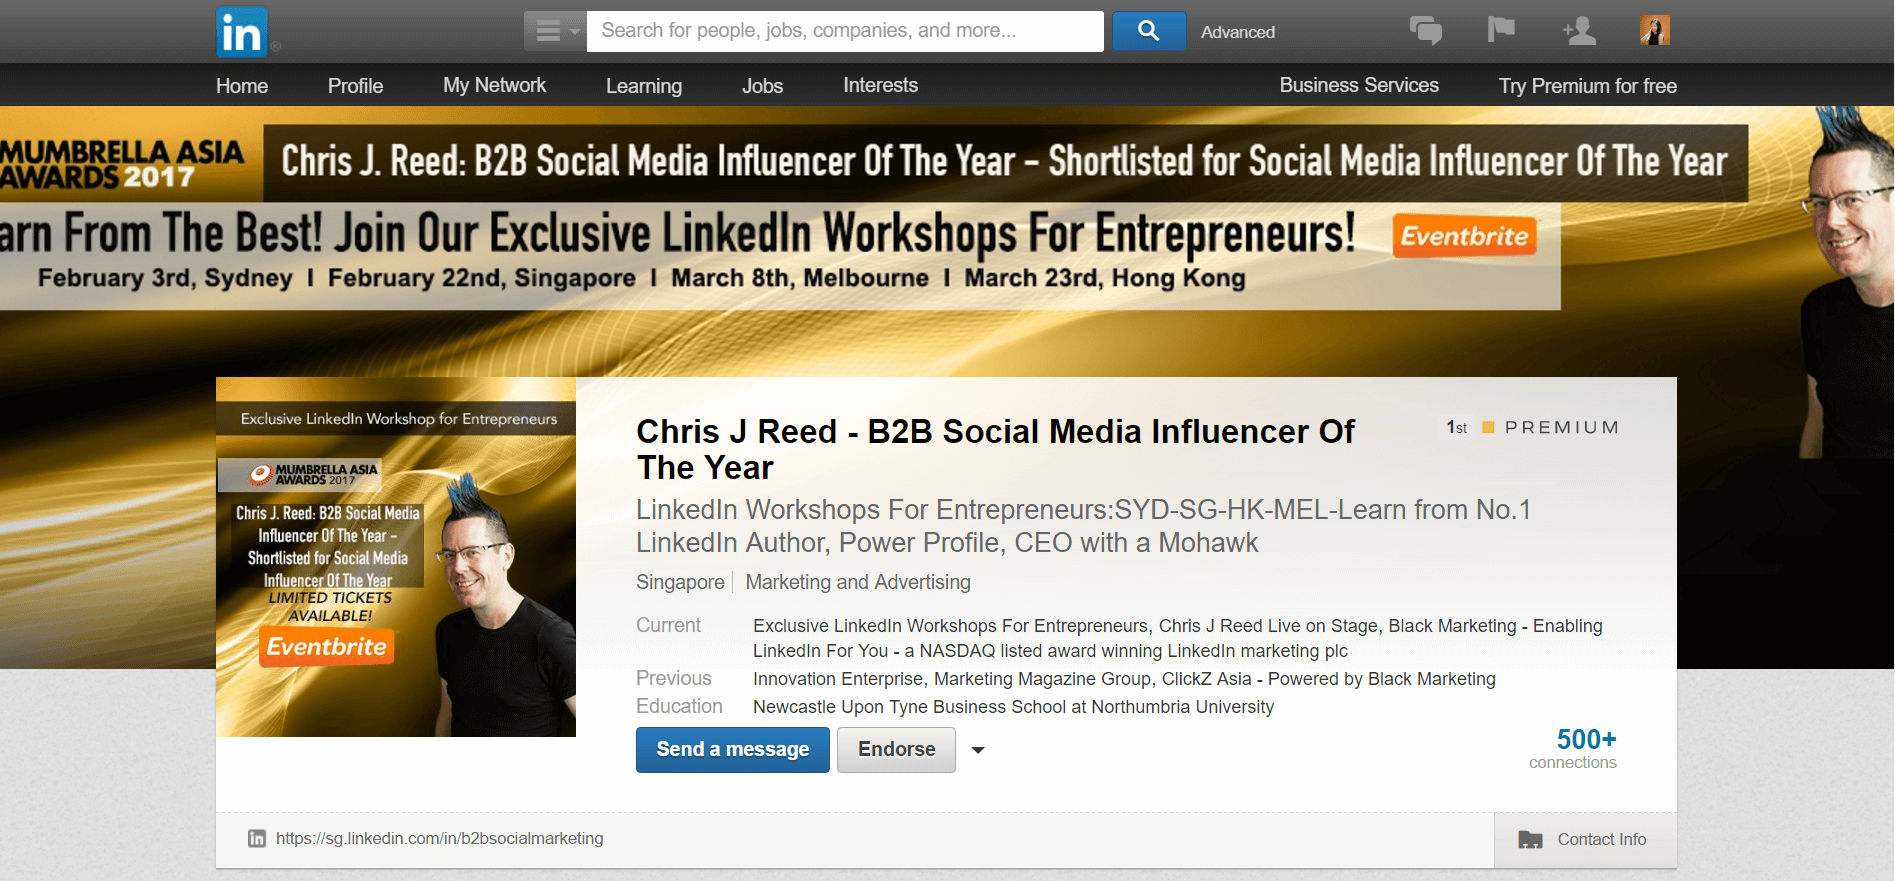 Chris J Reed - LinkedIn Power Profile